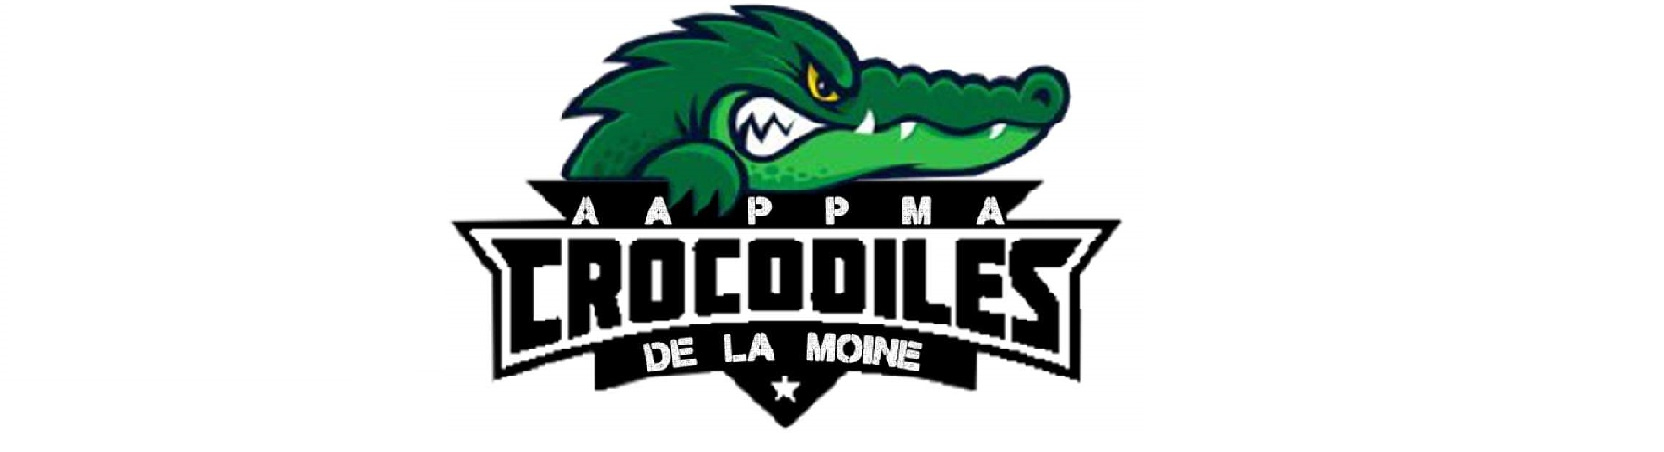 Les Crocodiles de la Moine